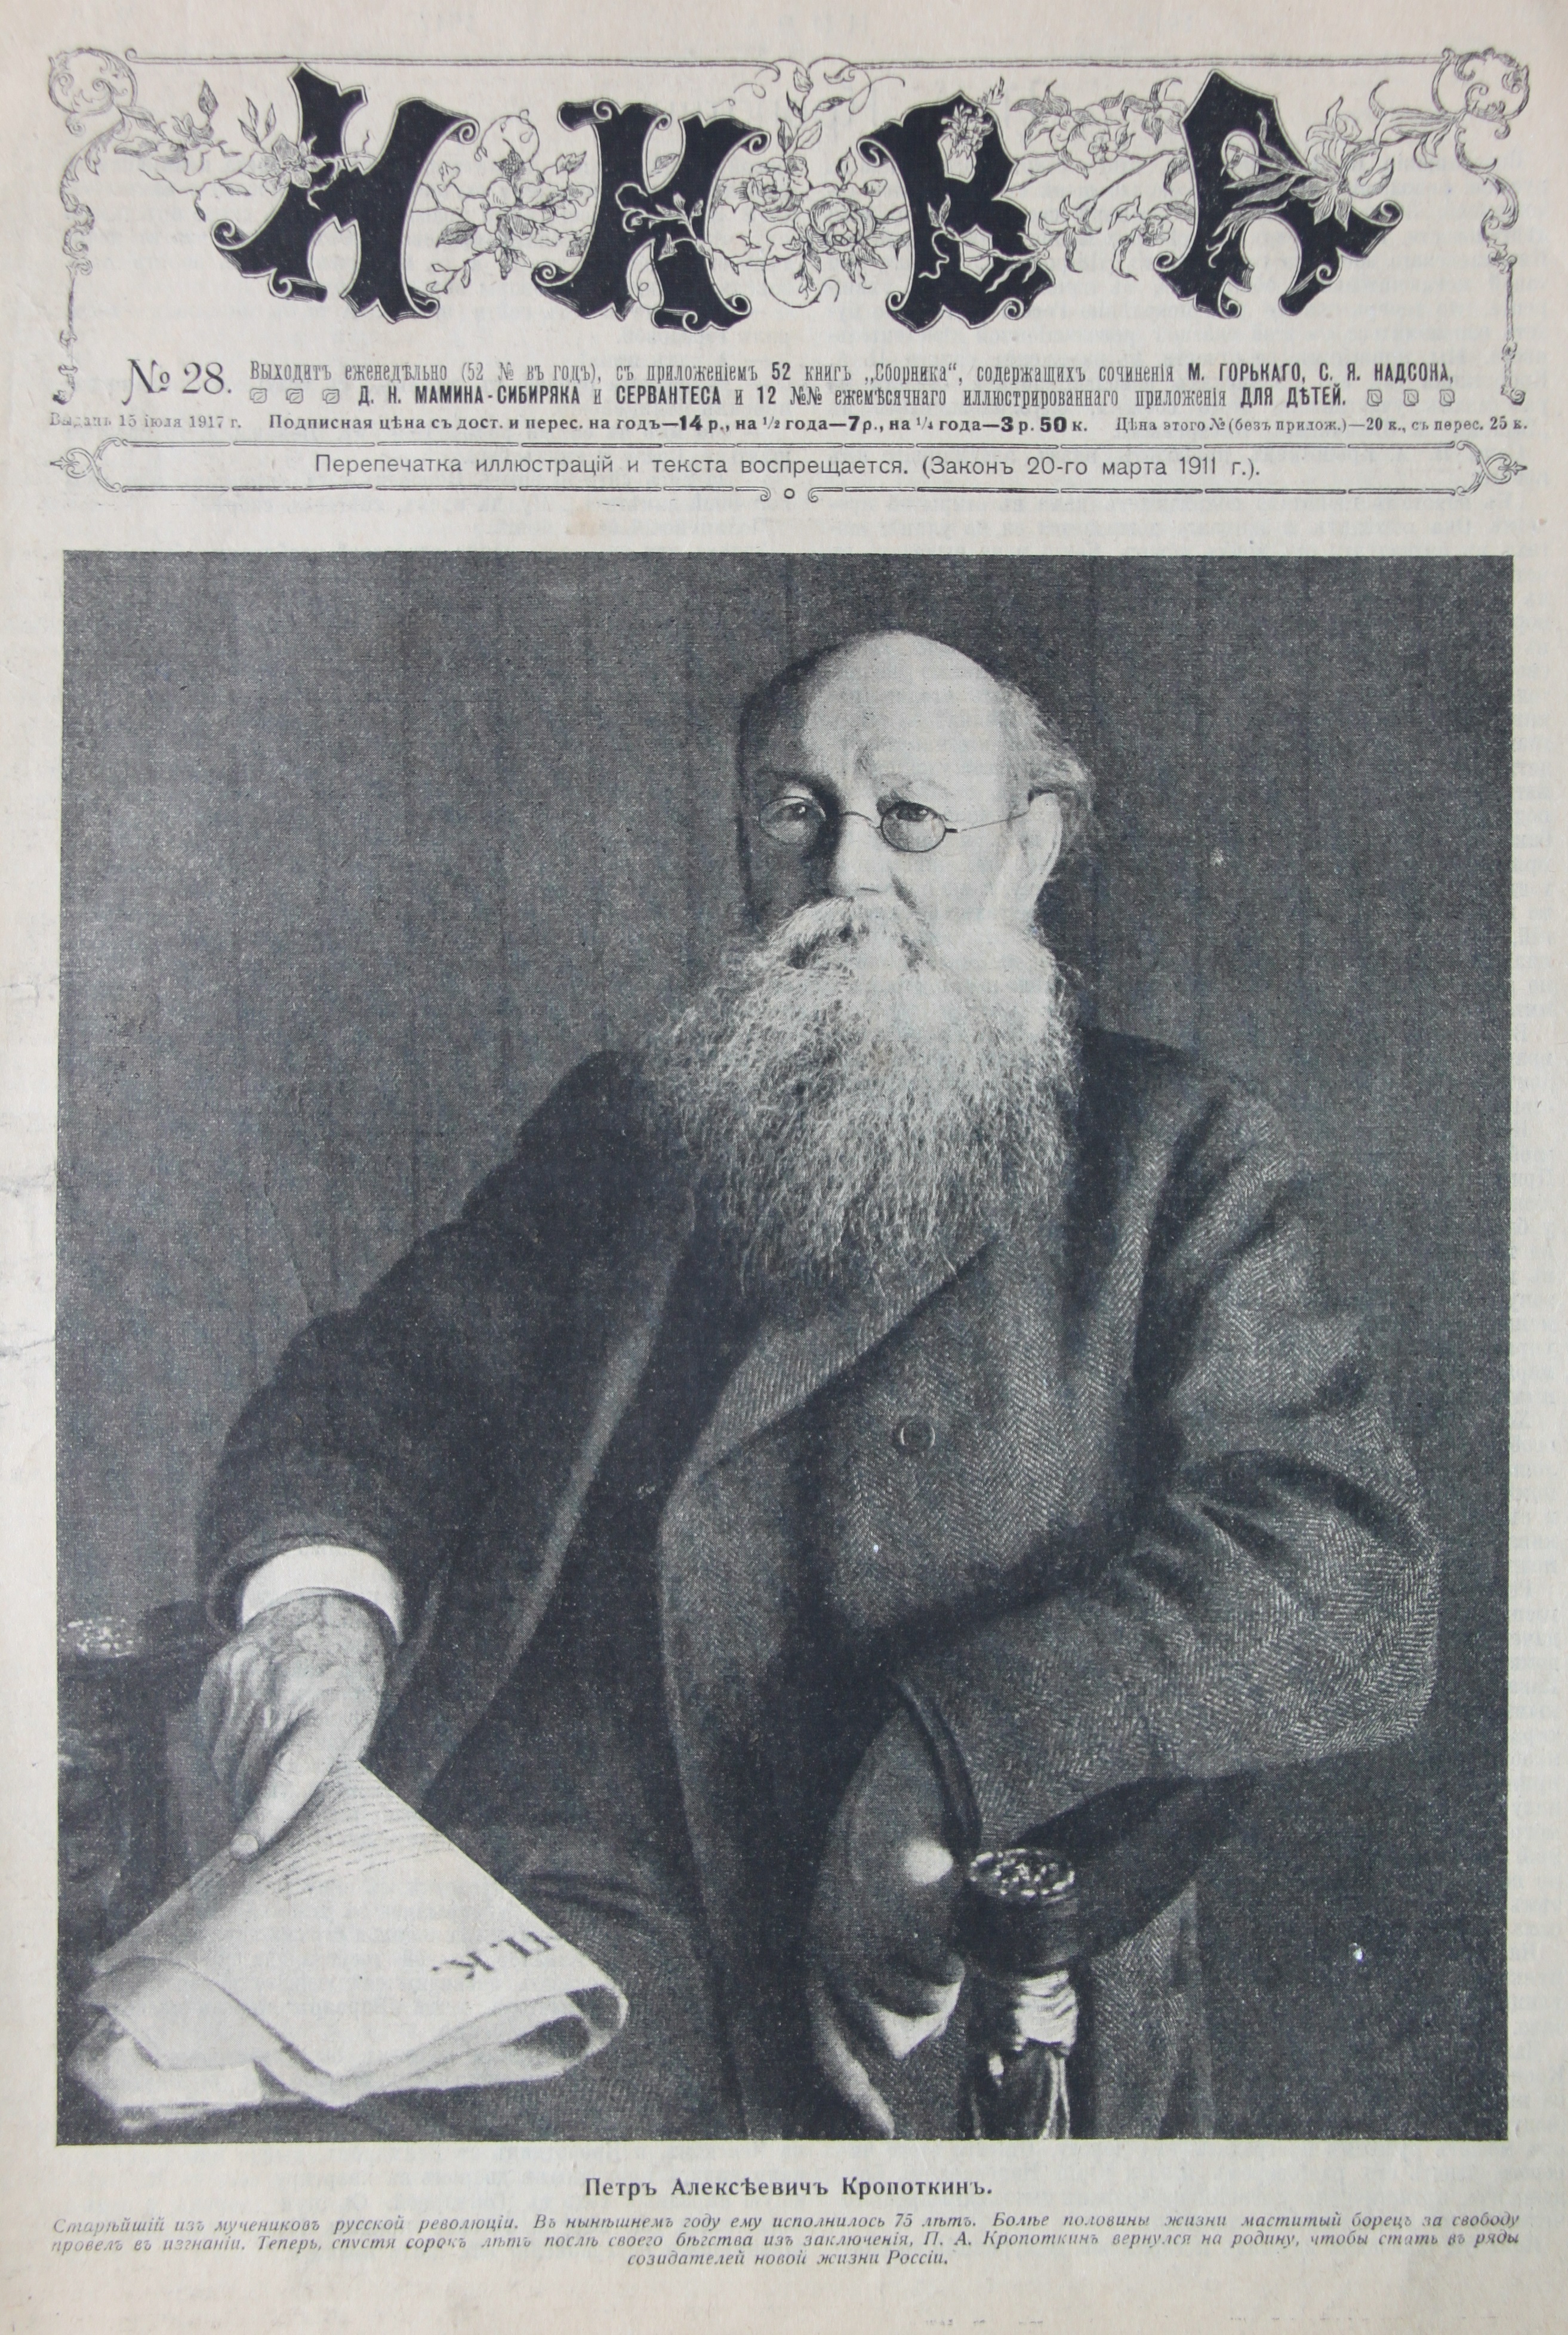 Журнал НИВА №28 от 1921 года, фото П.А.Кропоткина и статья о нем